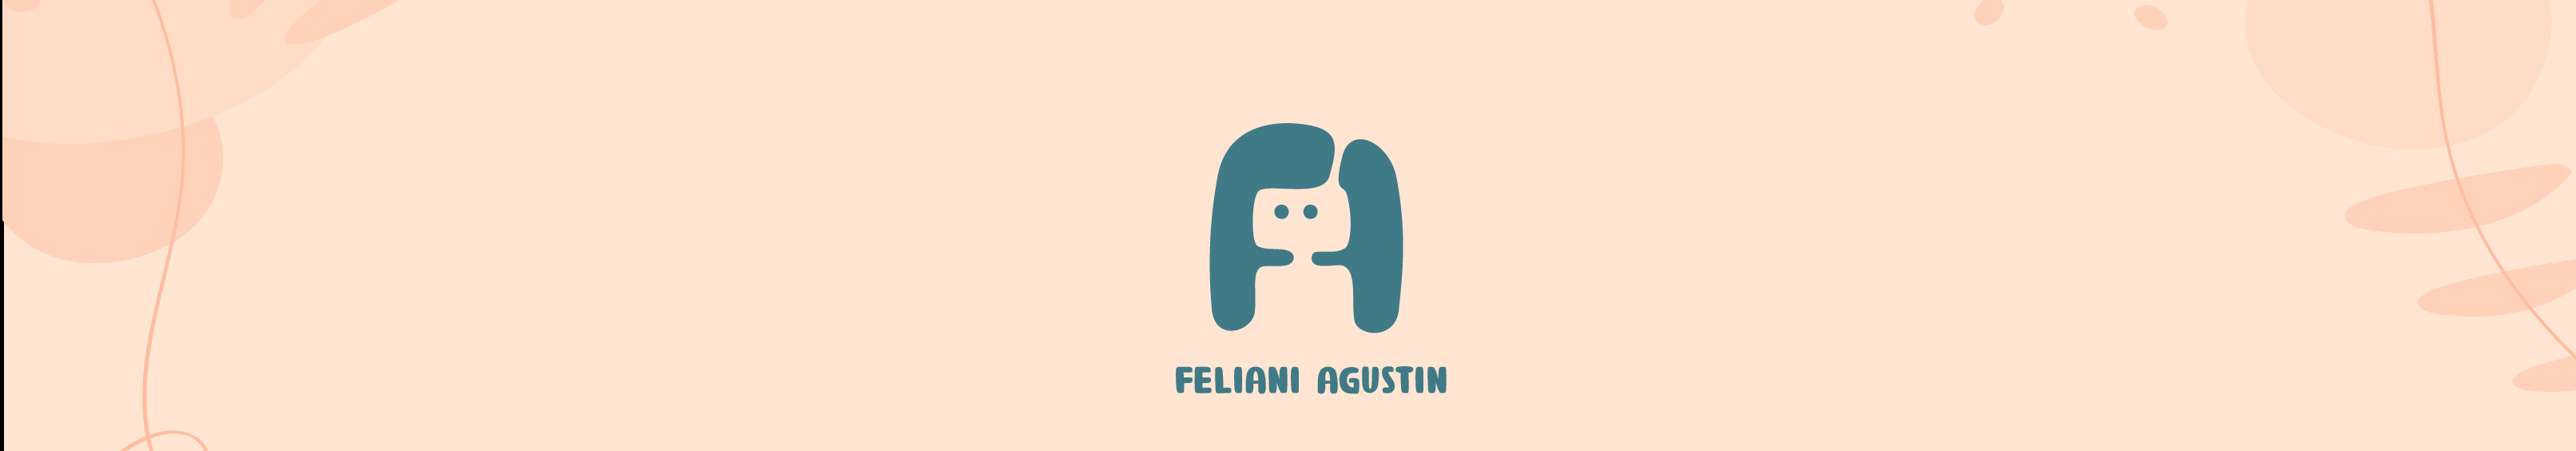 FELIANI AGUSTIN's profile banner